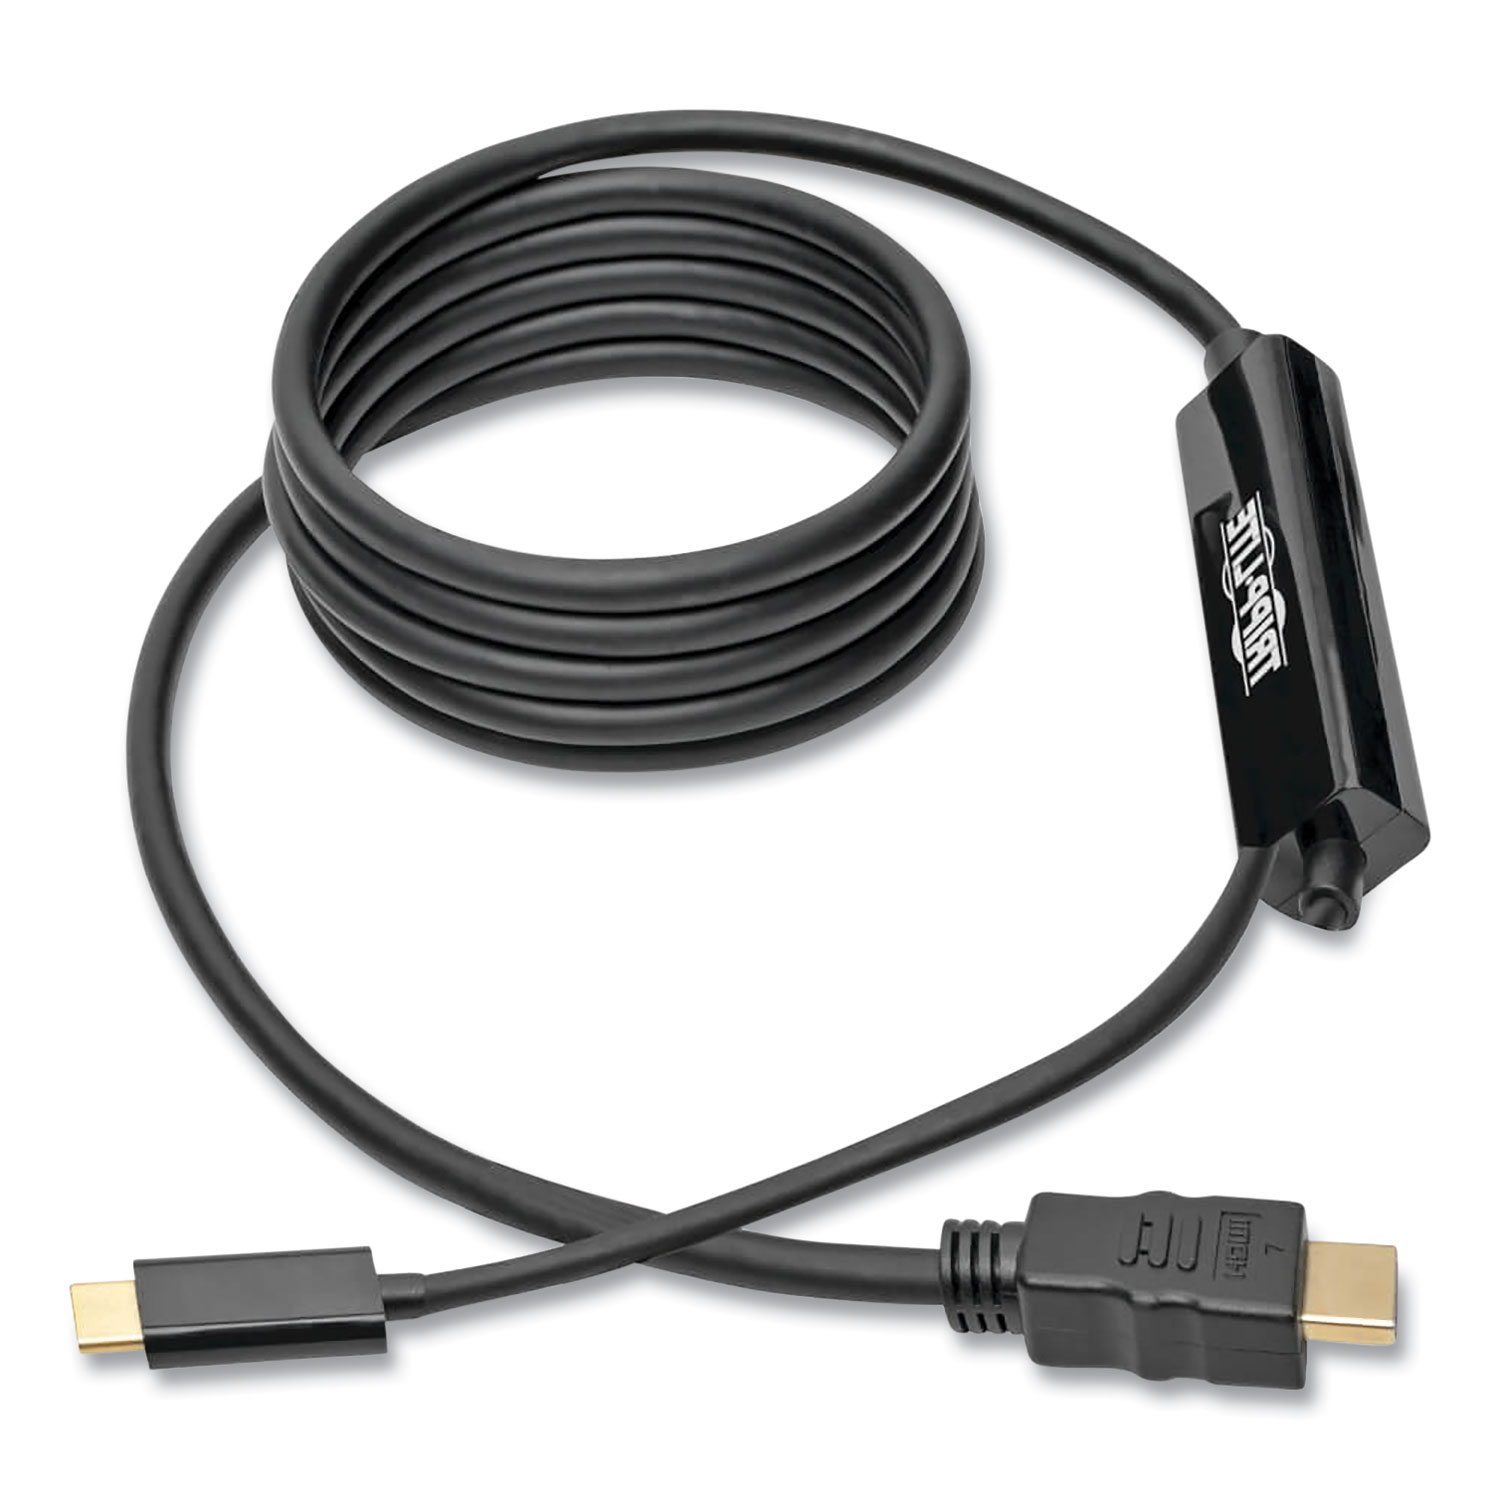 Tripp Lite USB C to HDMI Adapter Cable Converter UHD Ultra High Definition  4K x 2K @ 30Hz M/M USB Type C, USB-C, USB - U444-006-H - USB Adapters 